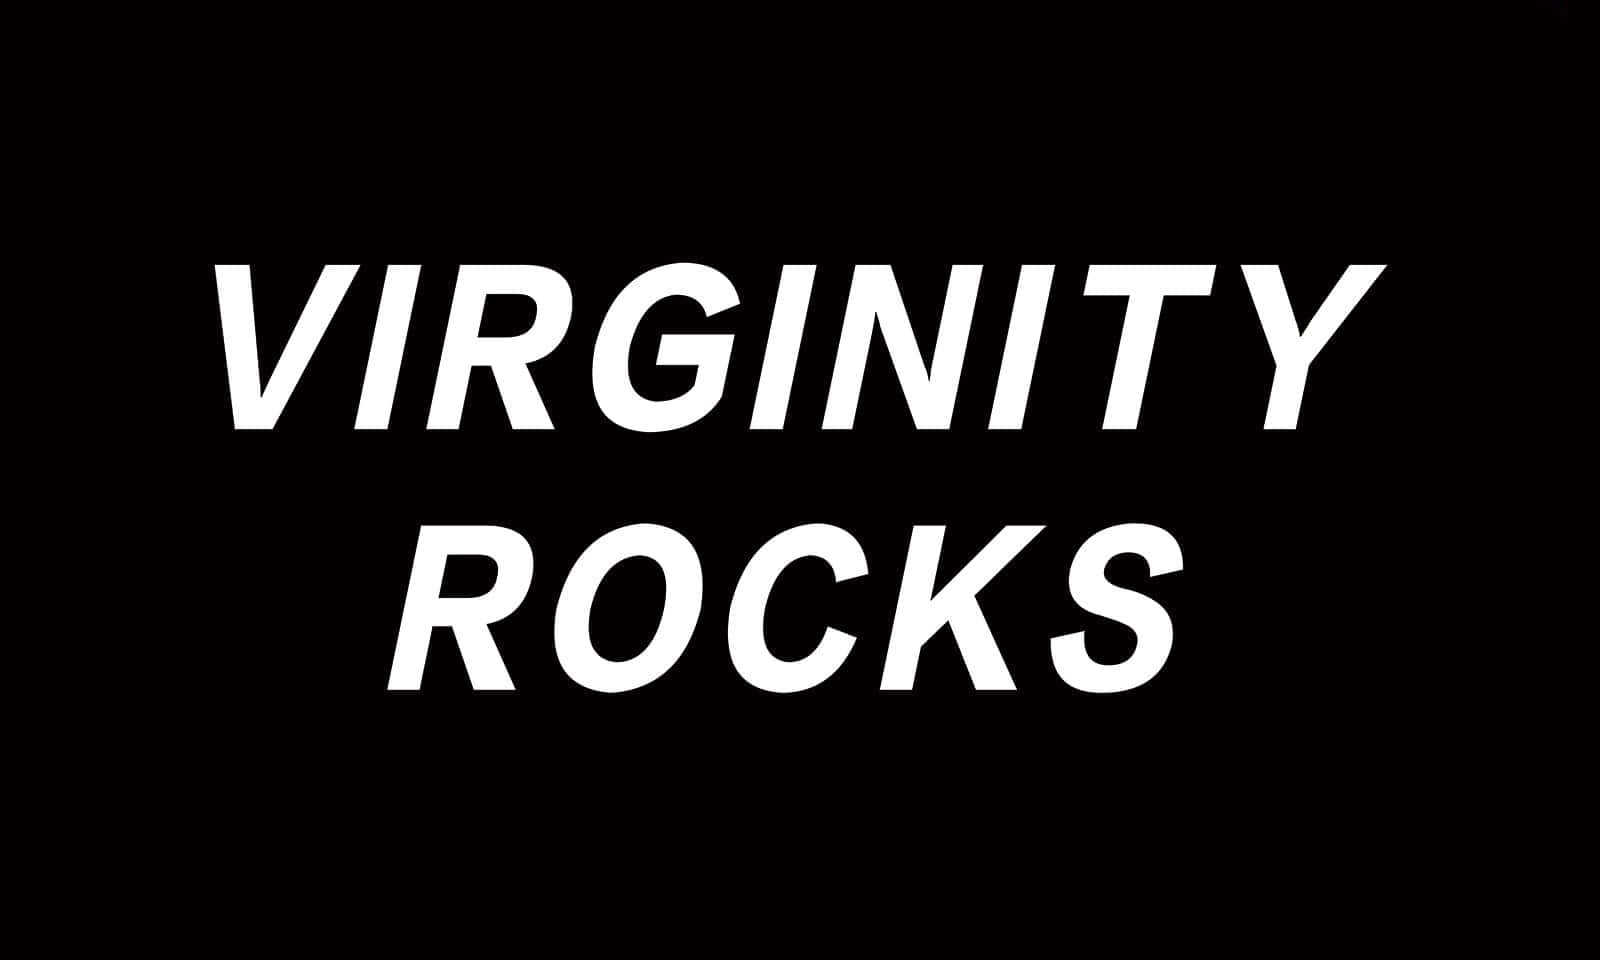 Virginity Rocks Statement Wallpaper